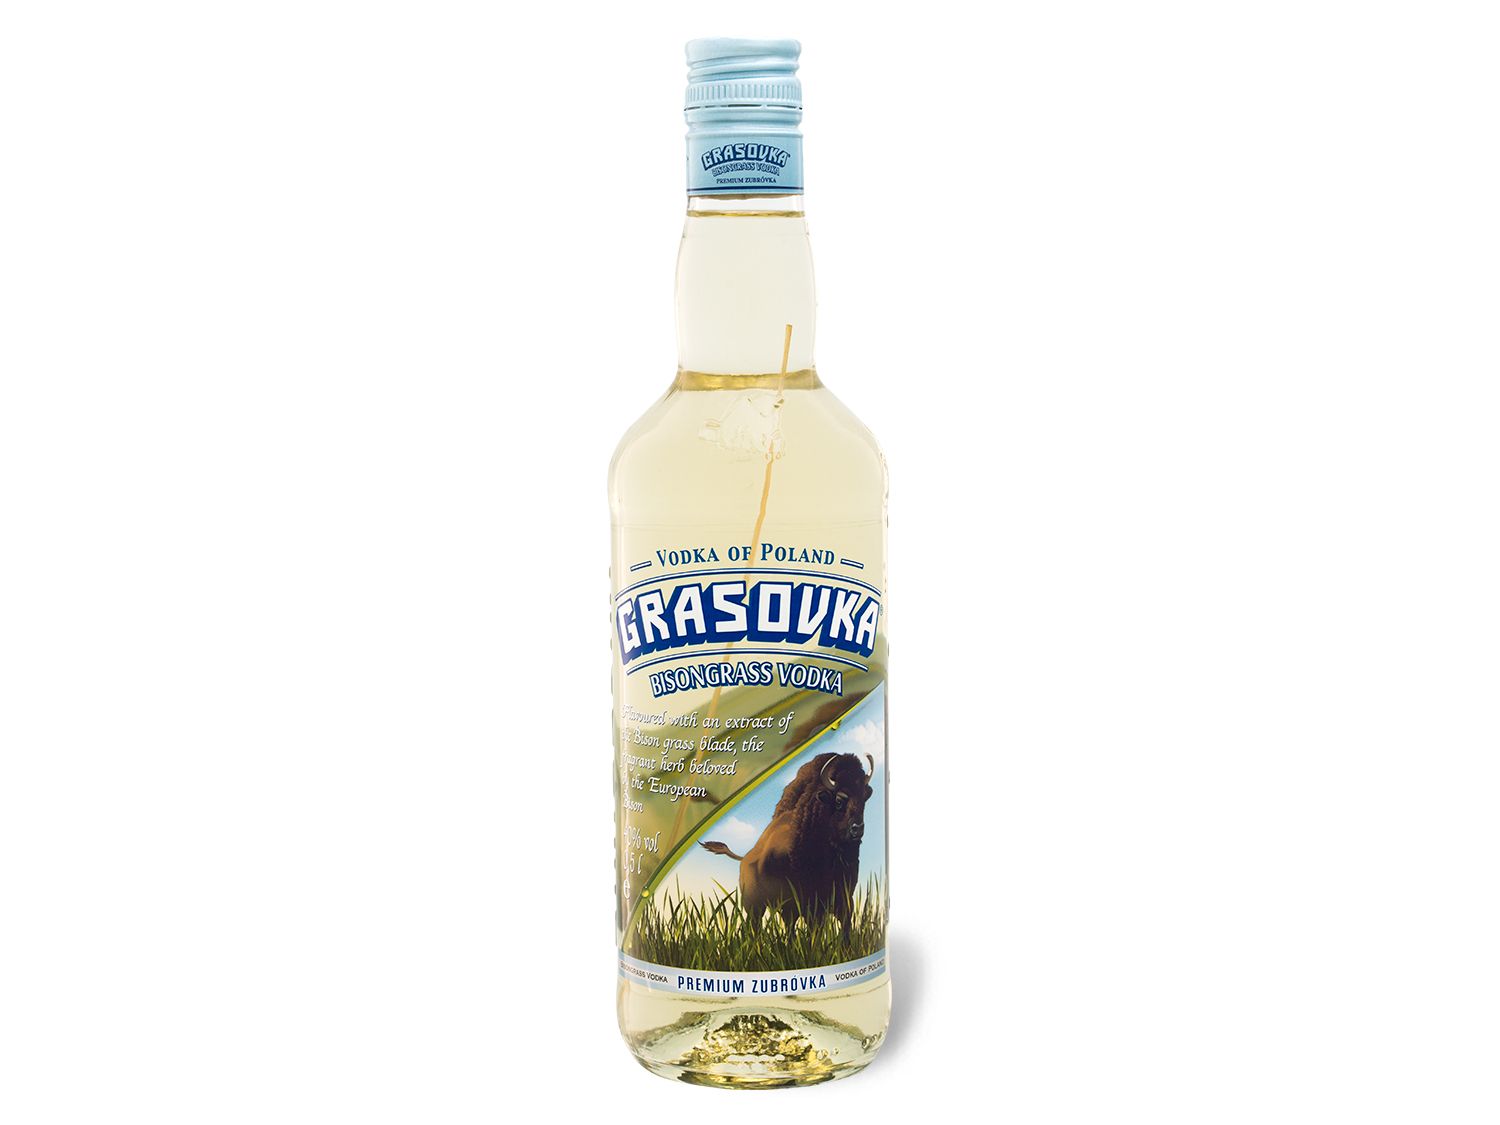 Grasovka Bisongrass Vodka 38% Vol